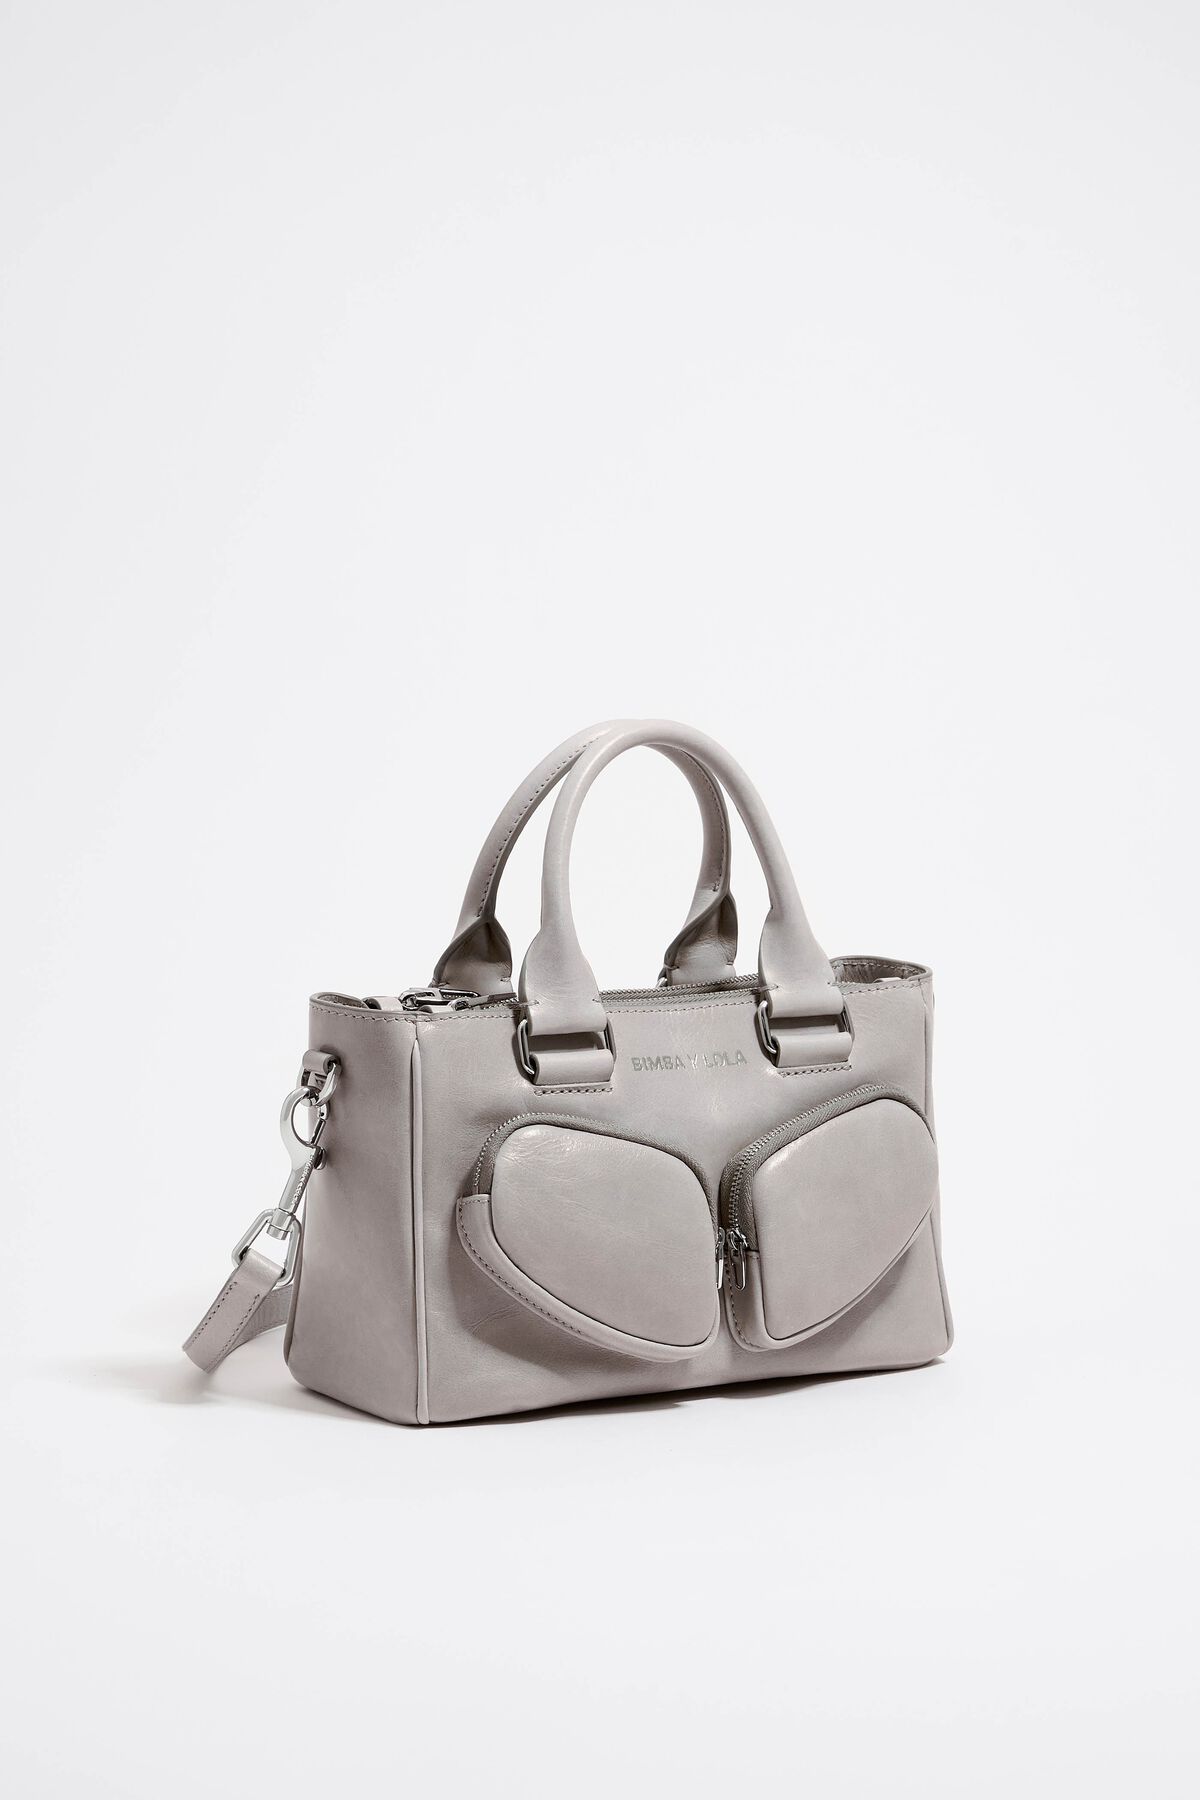 Medium gray leather pocket tote bag